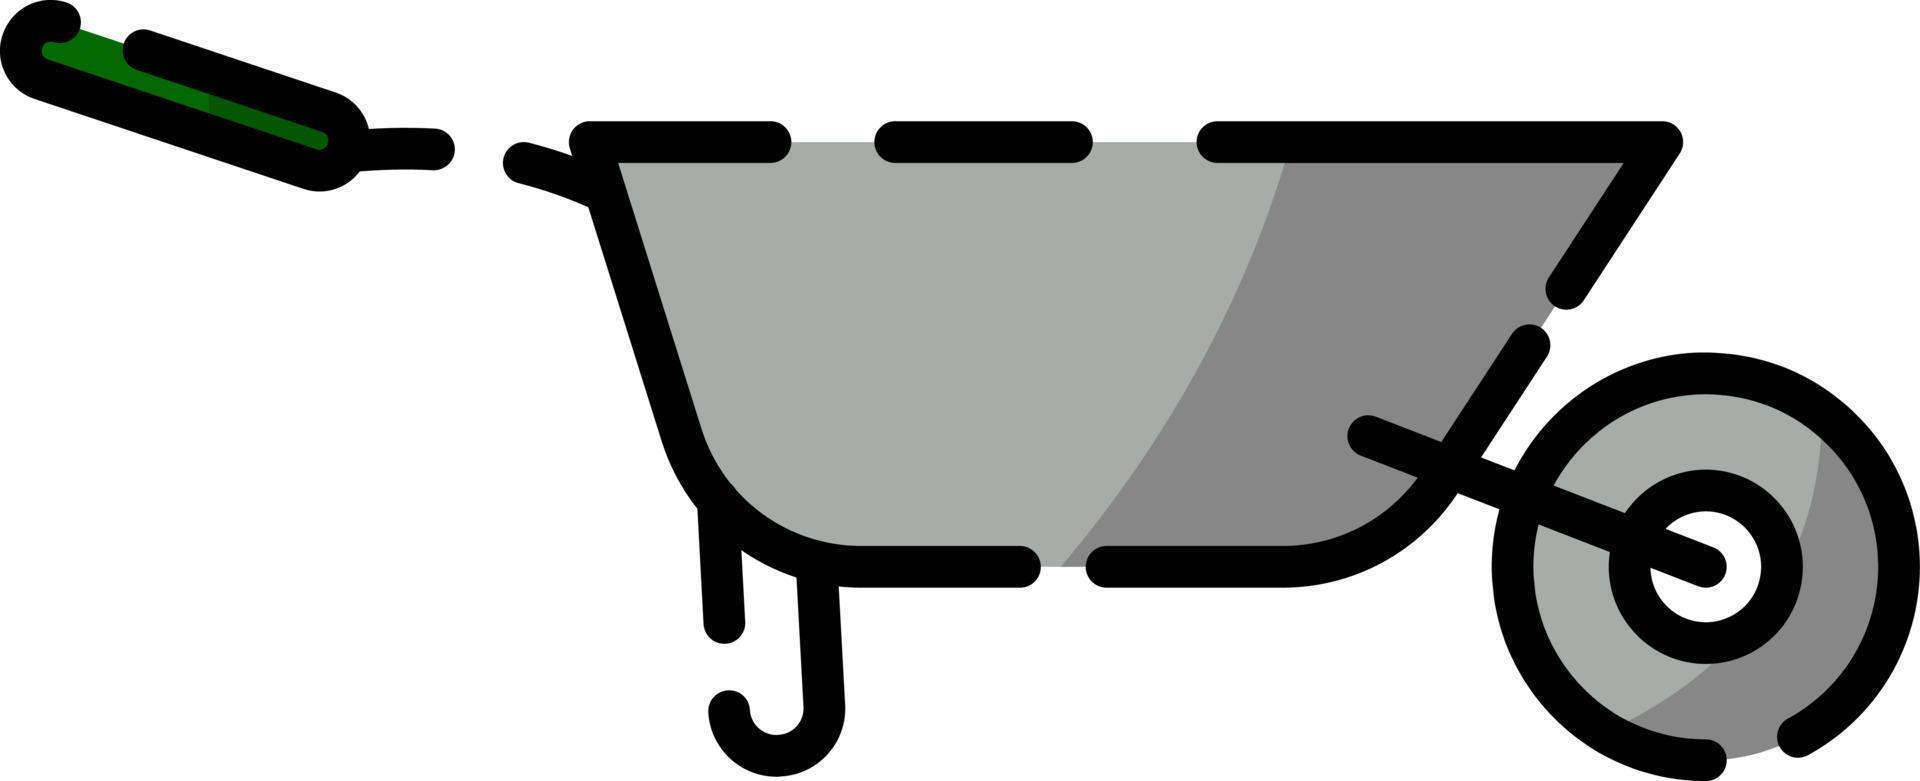 Gardening wheelbarrow, illustration, vector on a white background.